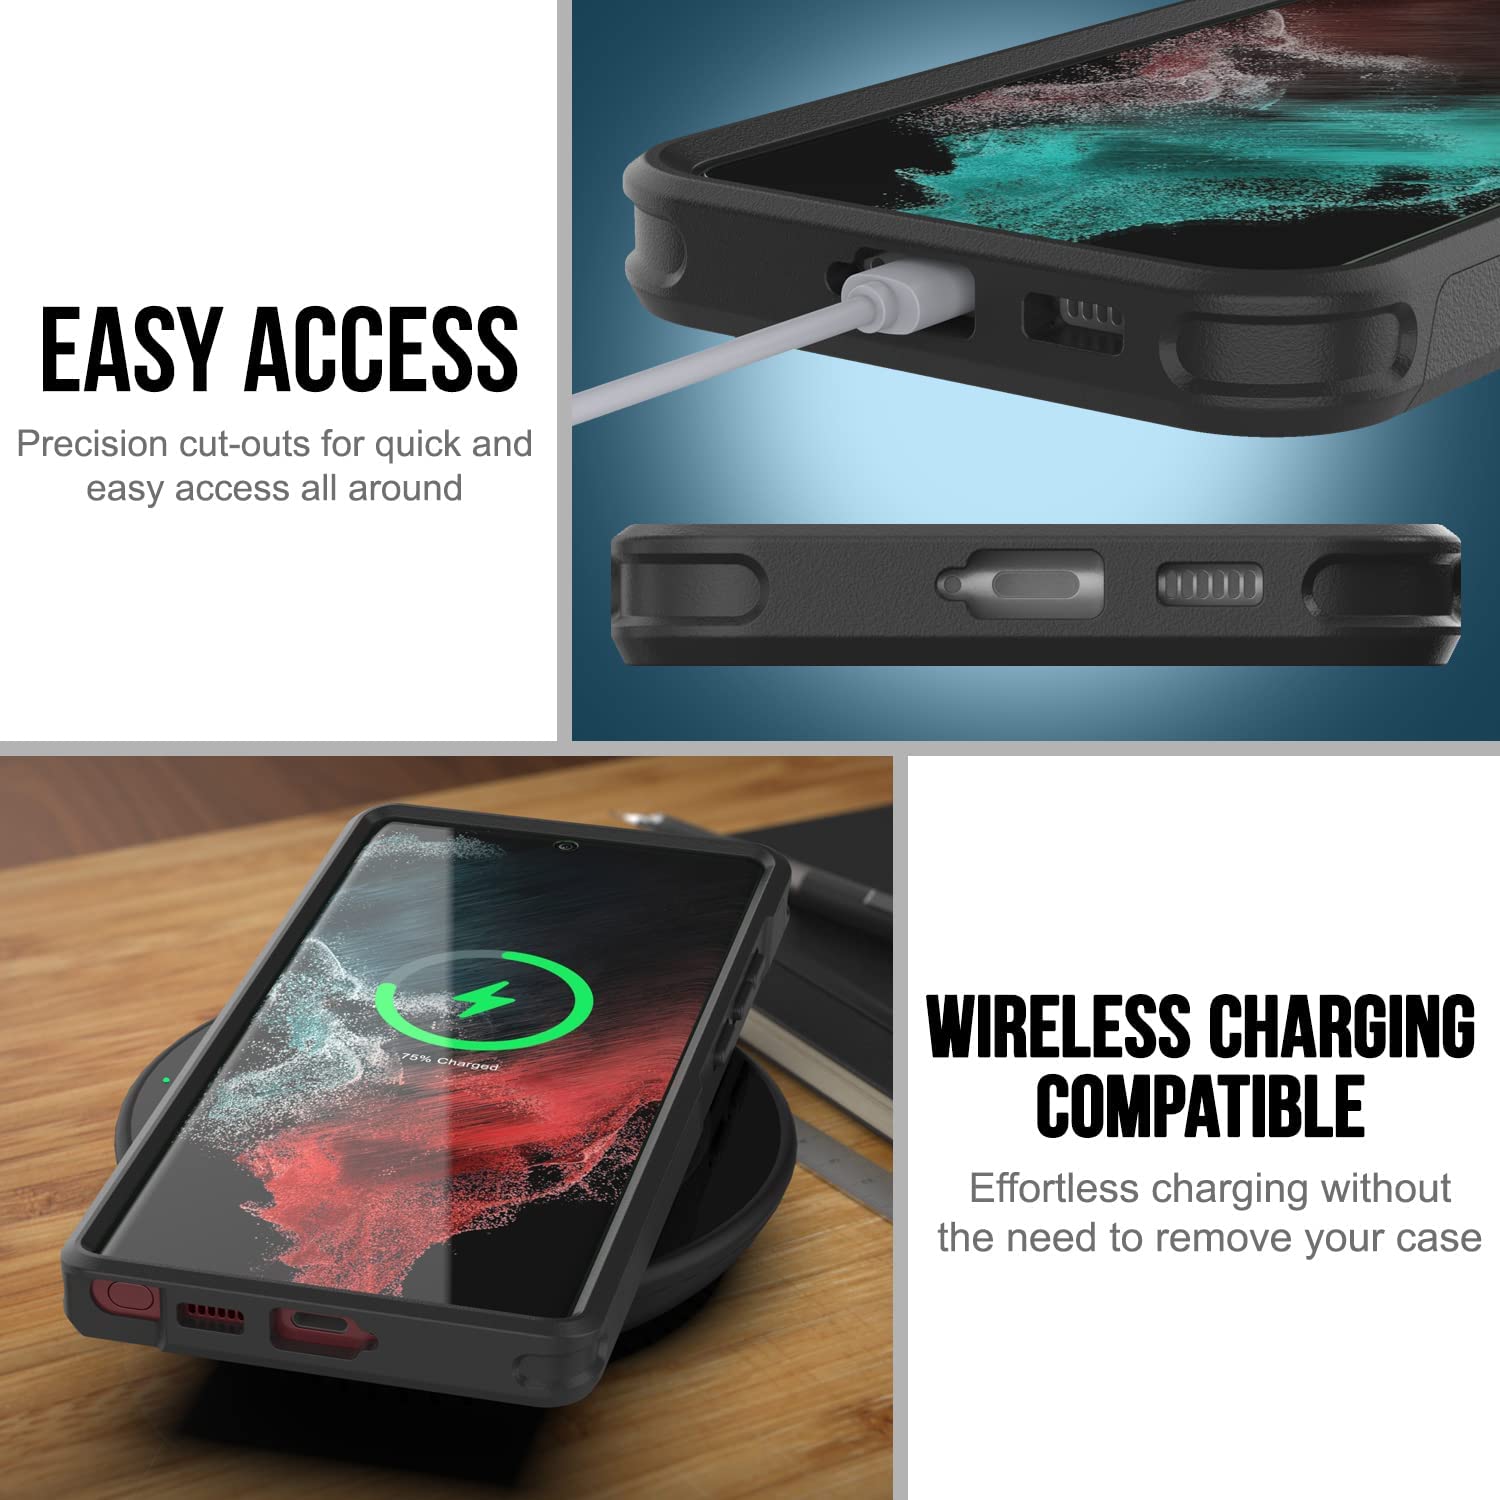 Rugged Galaxy S22 Plus lightweight clear minimalist case by VRS DESIGN –  VRS Design